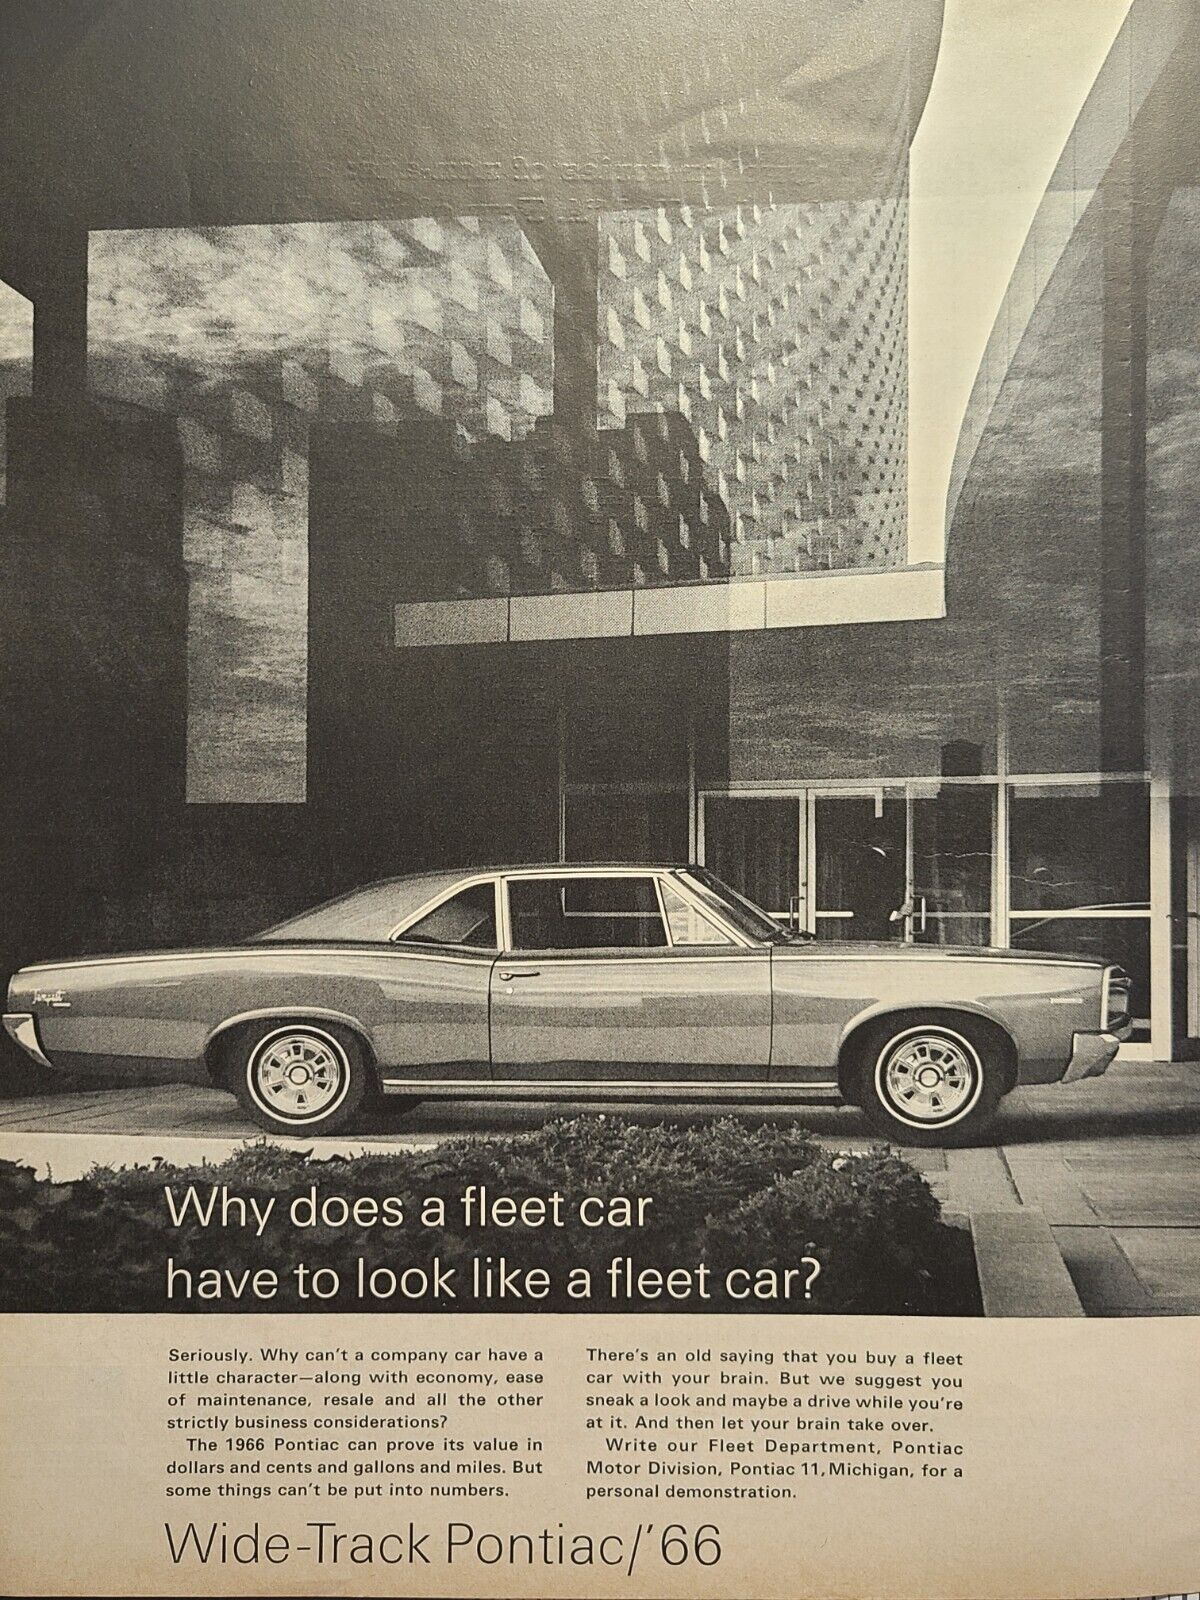 '66 Pontiac Wide-Track Tempest Fleet Car Division Vintage Print Ad 1965